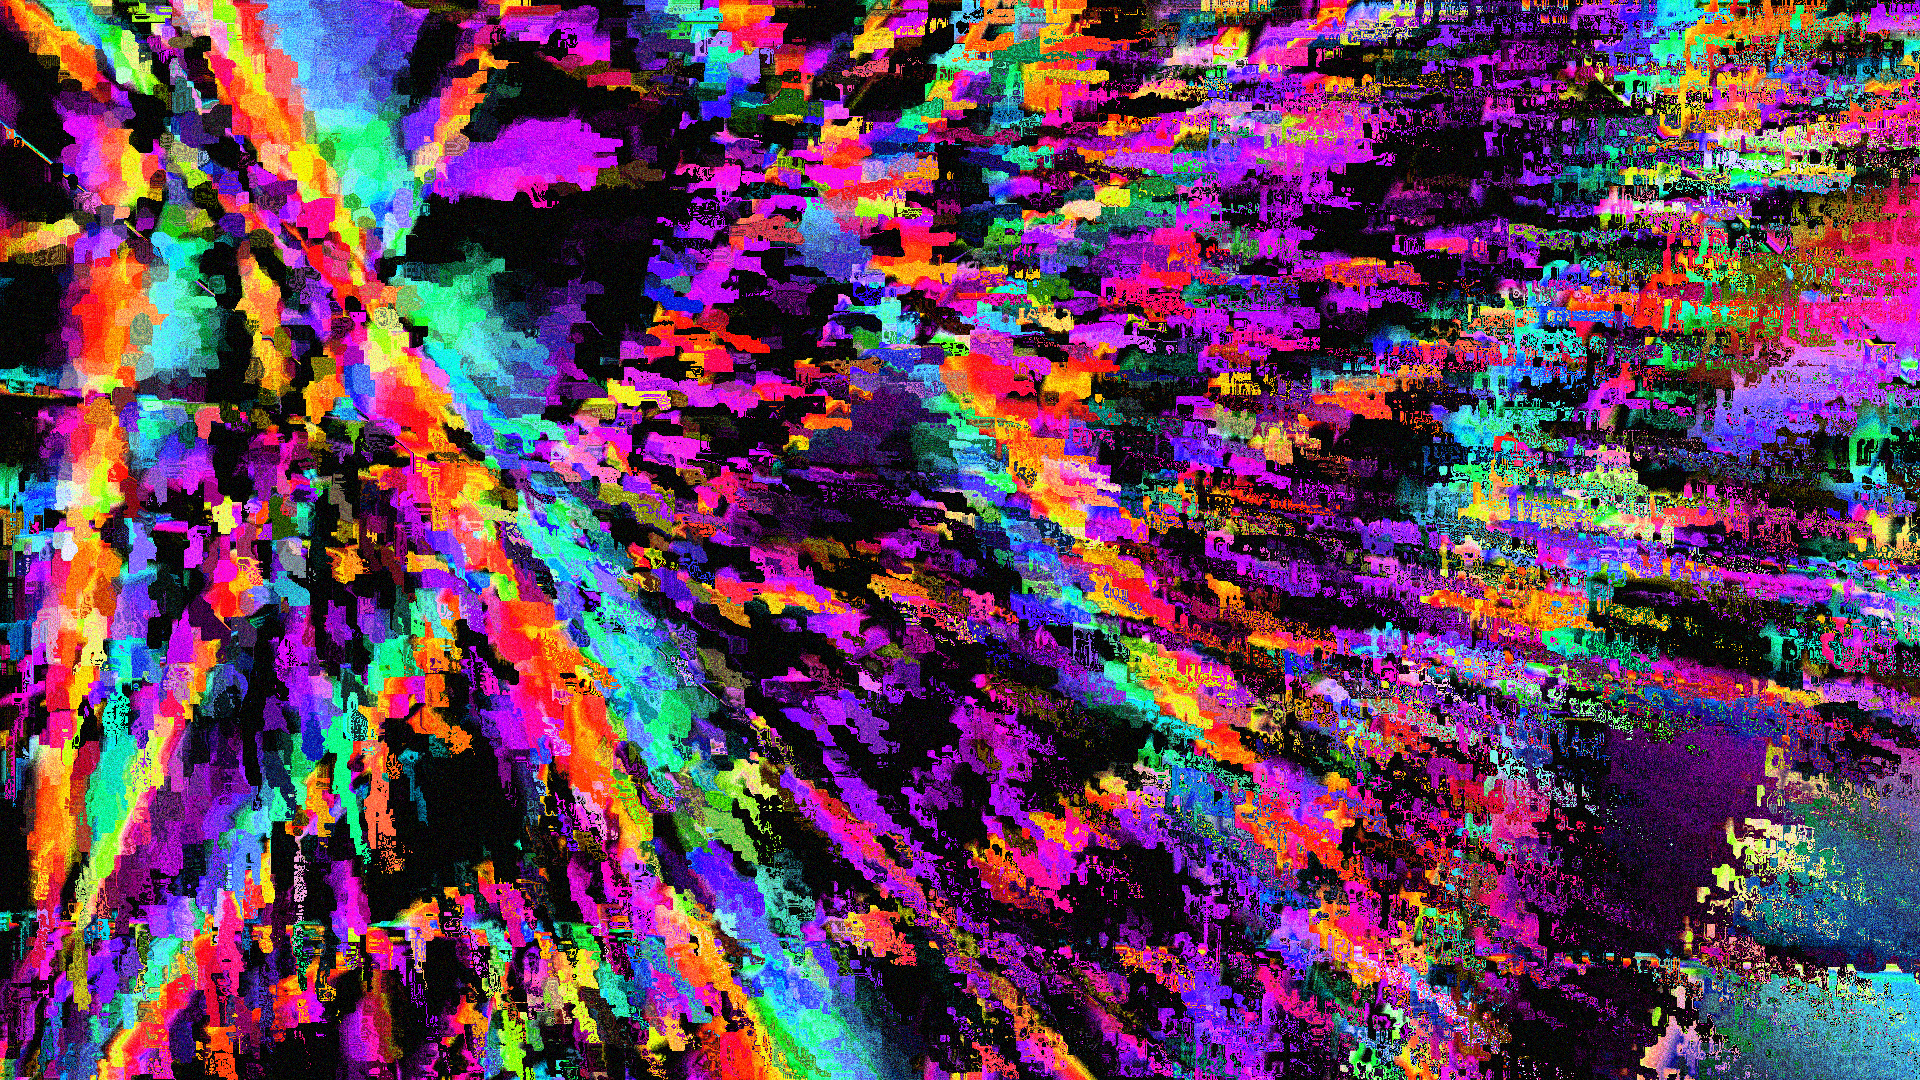 Abstract Colorful Vibrant Minimalism Digital Art Glitch Art Artwork Purple Iridescent Psychedelic 1920x1080